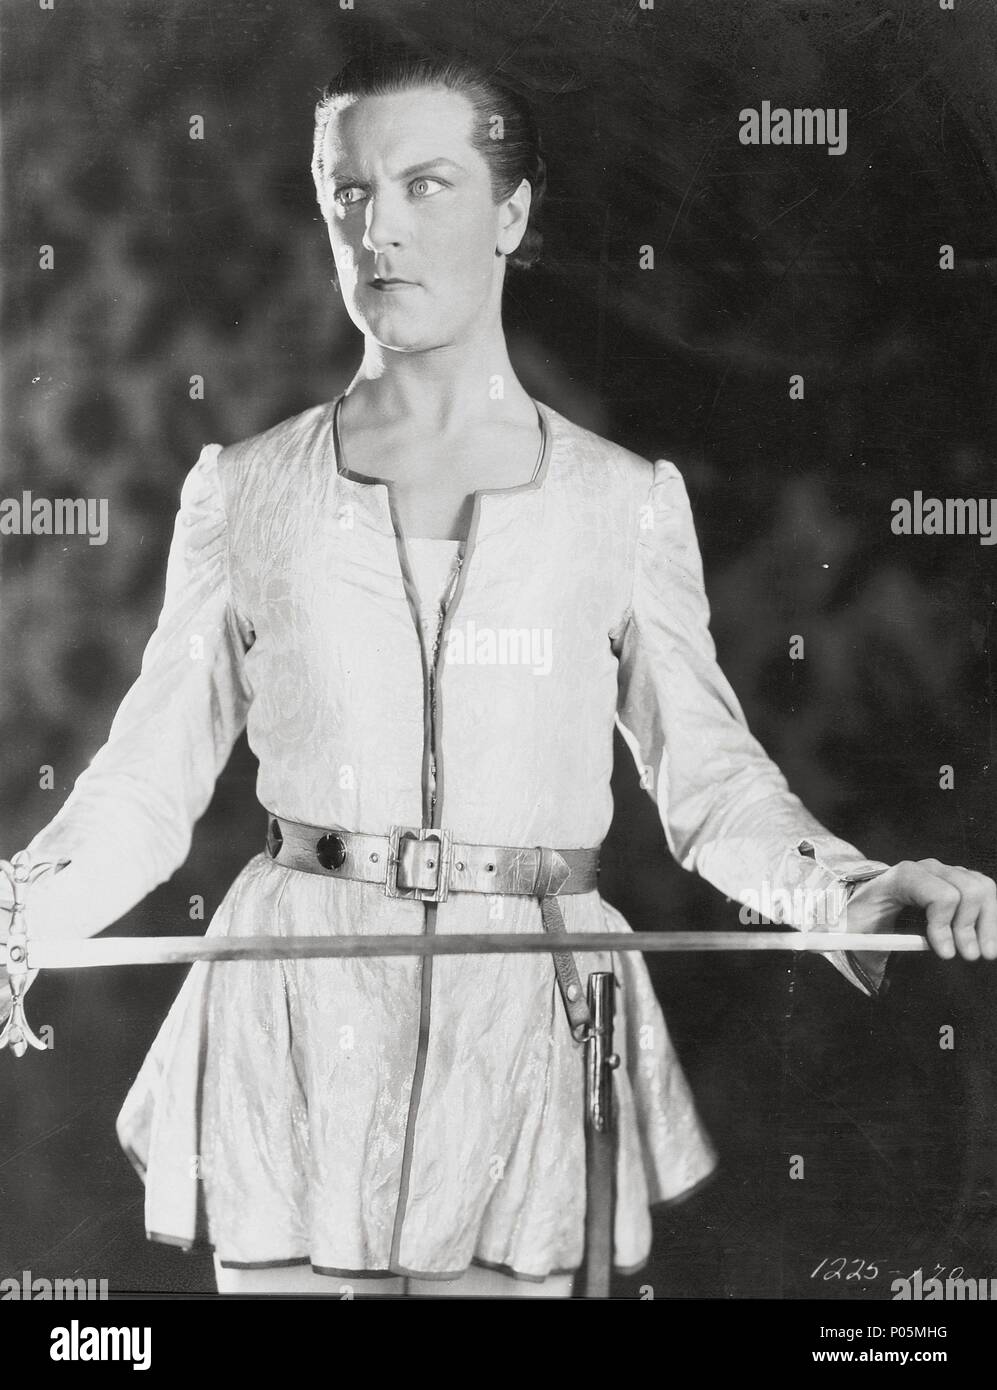 Original Film Titel: THE VAGABOND KING. Englischer Titel: The Vagabond King. Film Regie: Ludwig Berger. Jahr: 1930. Stars: DENNIS KING. Quelle: Paramount Pictures/Album Stockfoto